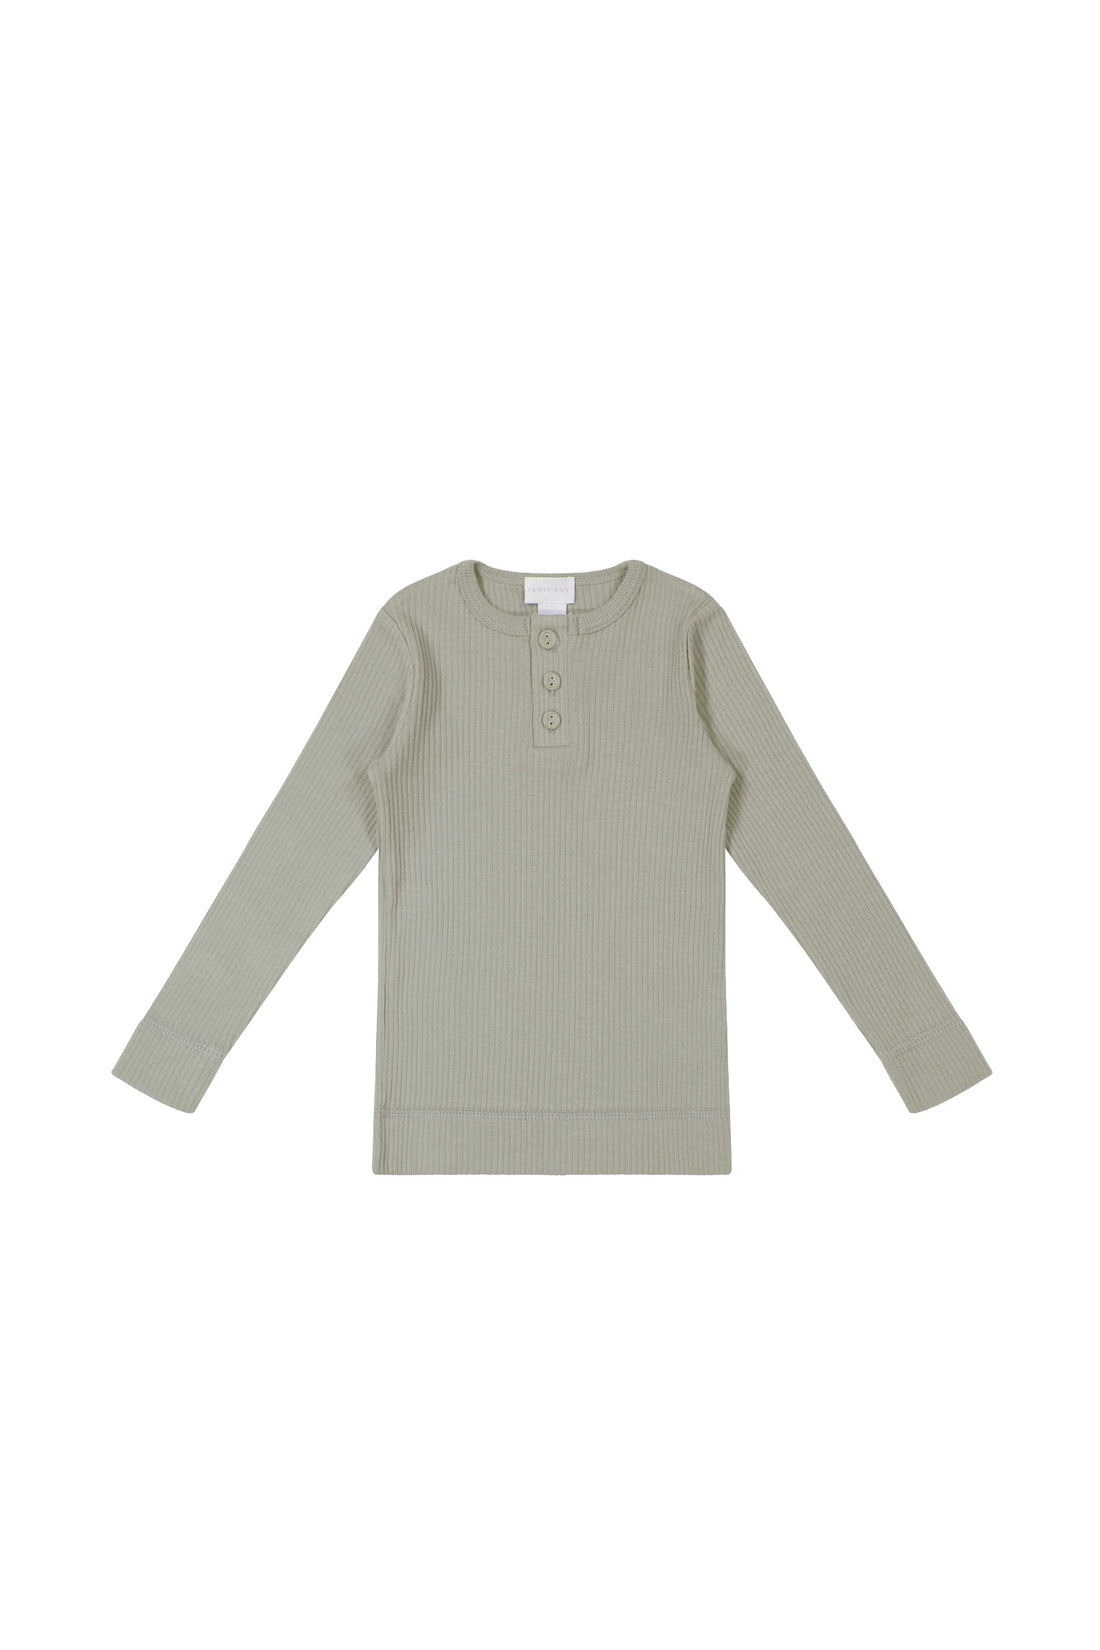 Organic Cotton Modal Long Sleeve Henley - Zen Childrens Top from Jamie Kay NZ